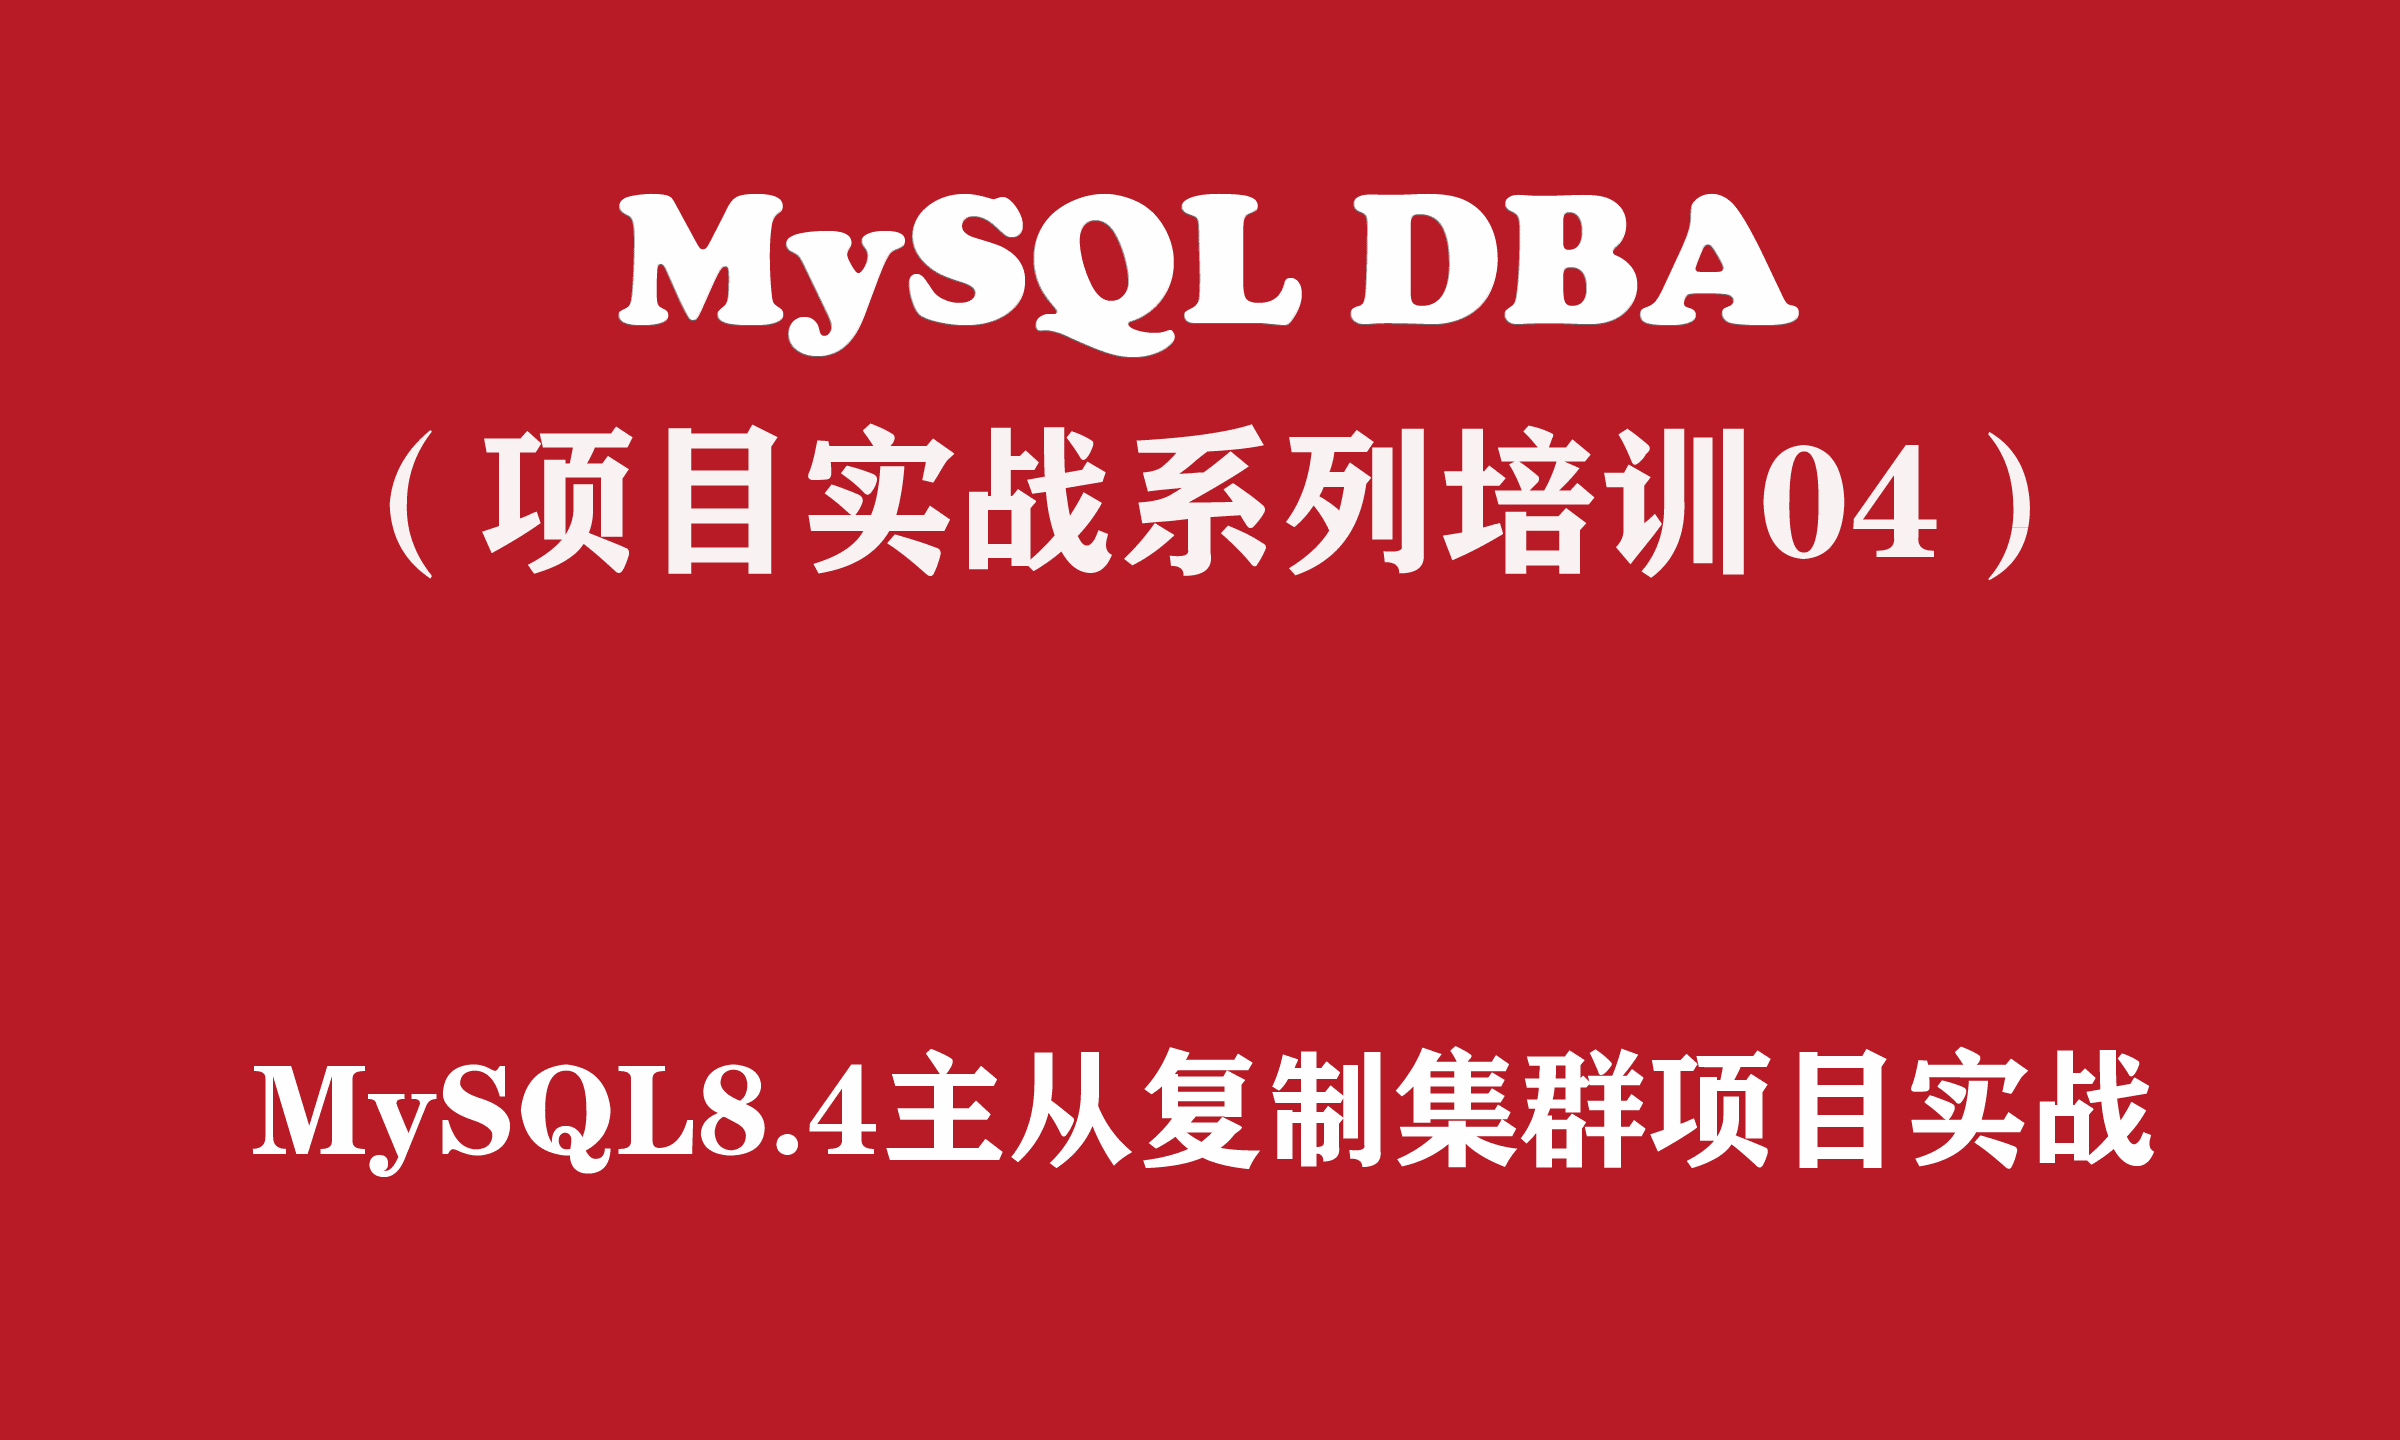  MySQL 8.4 Master Slave Replication Cluster Project Practice [MySQL DBA Practice Training Series 04]